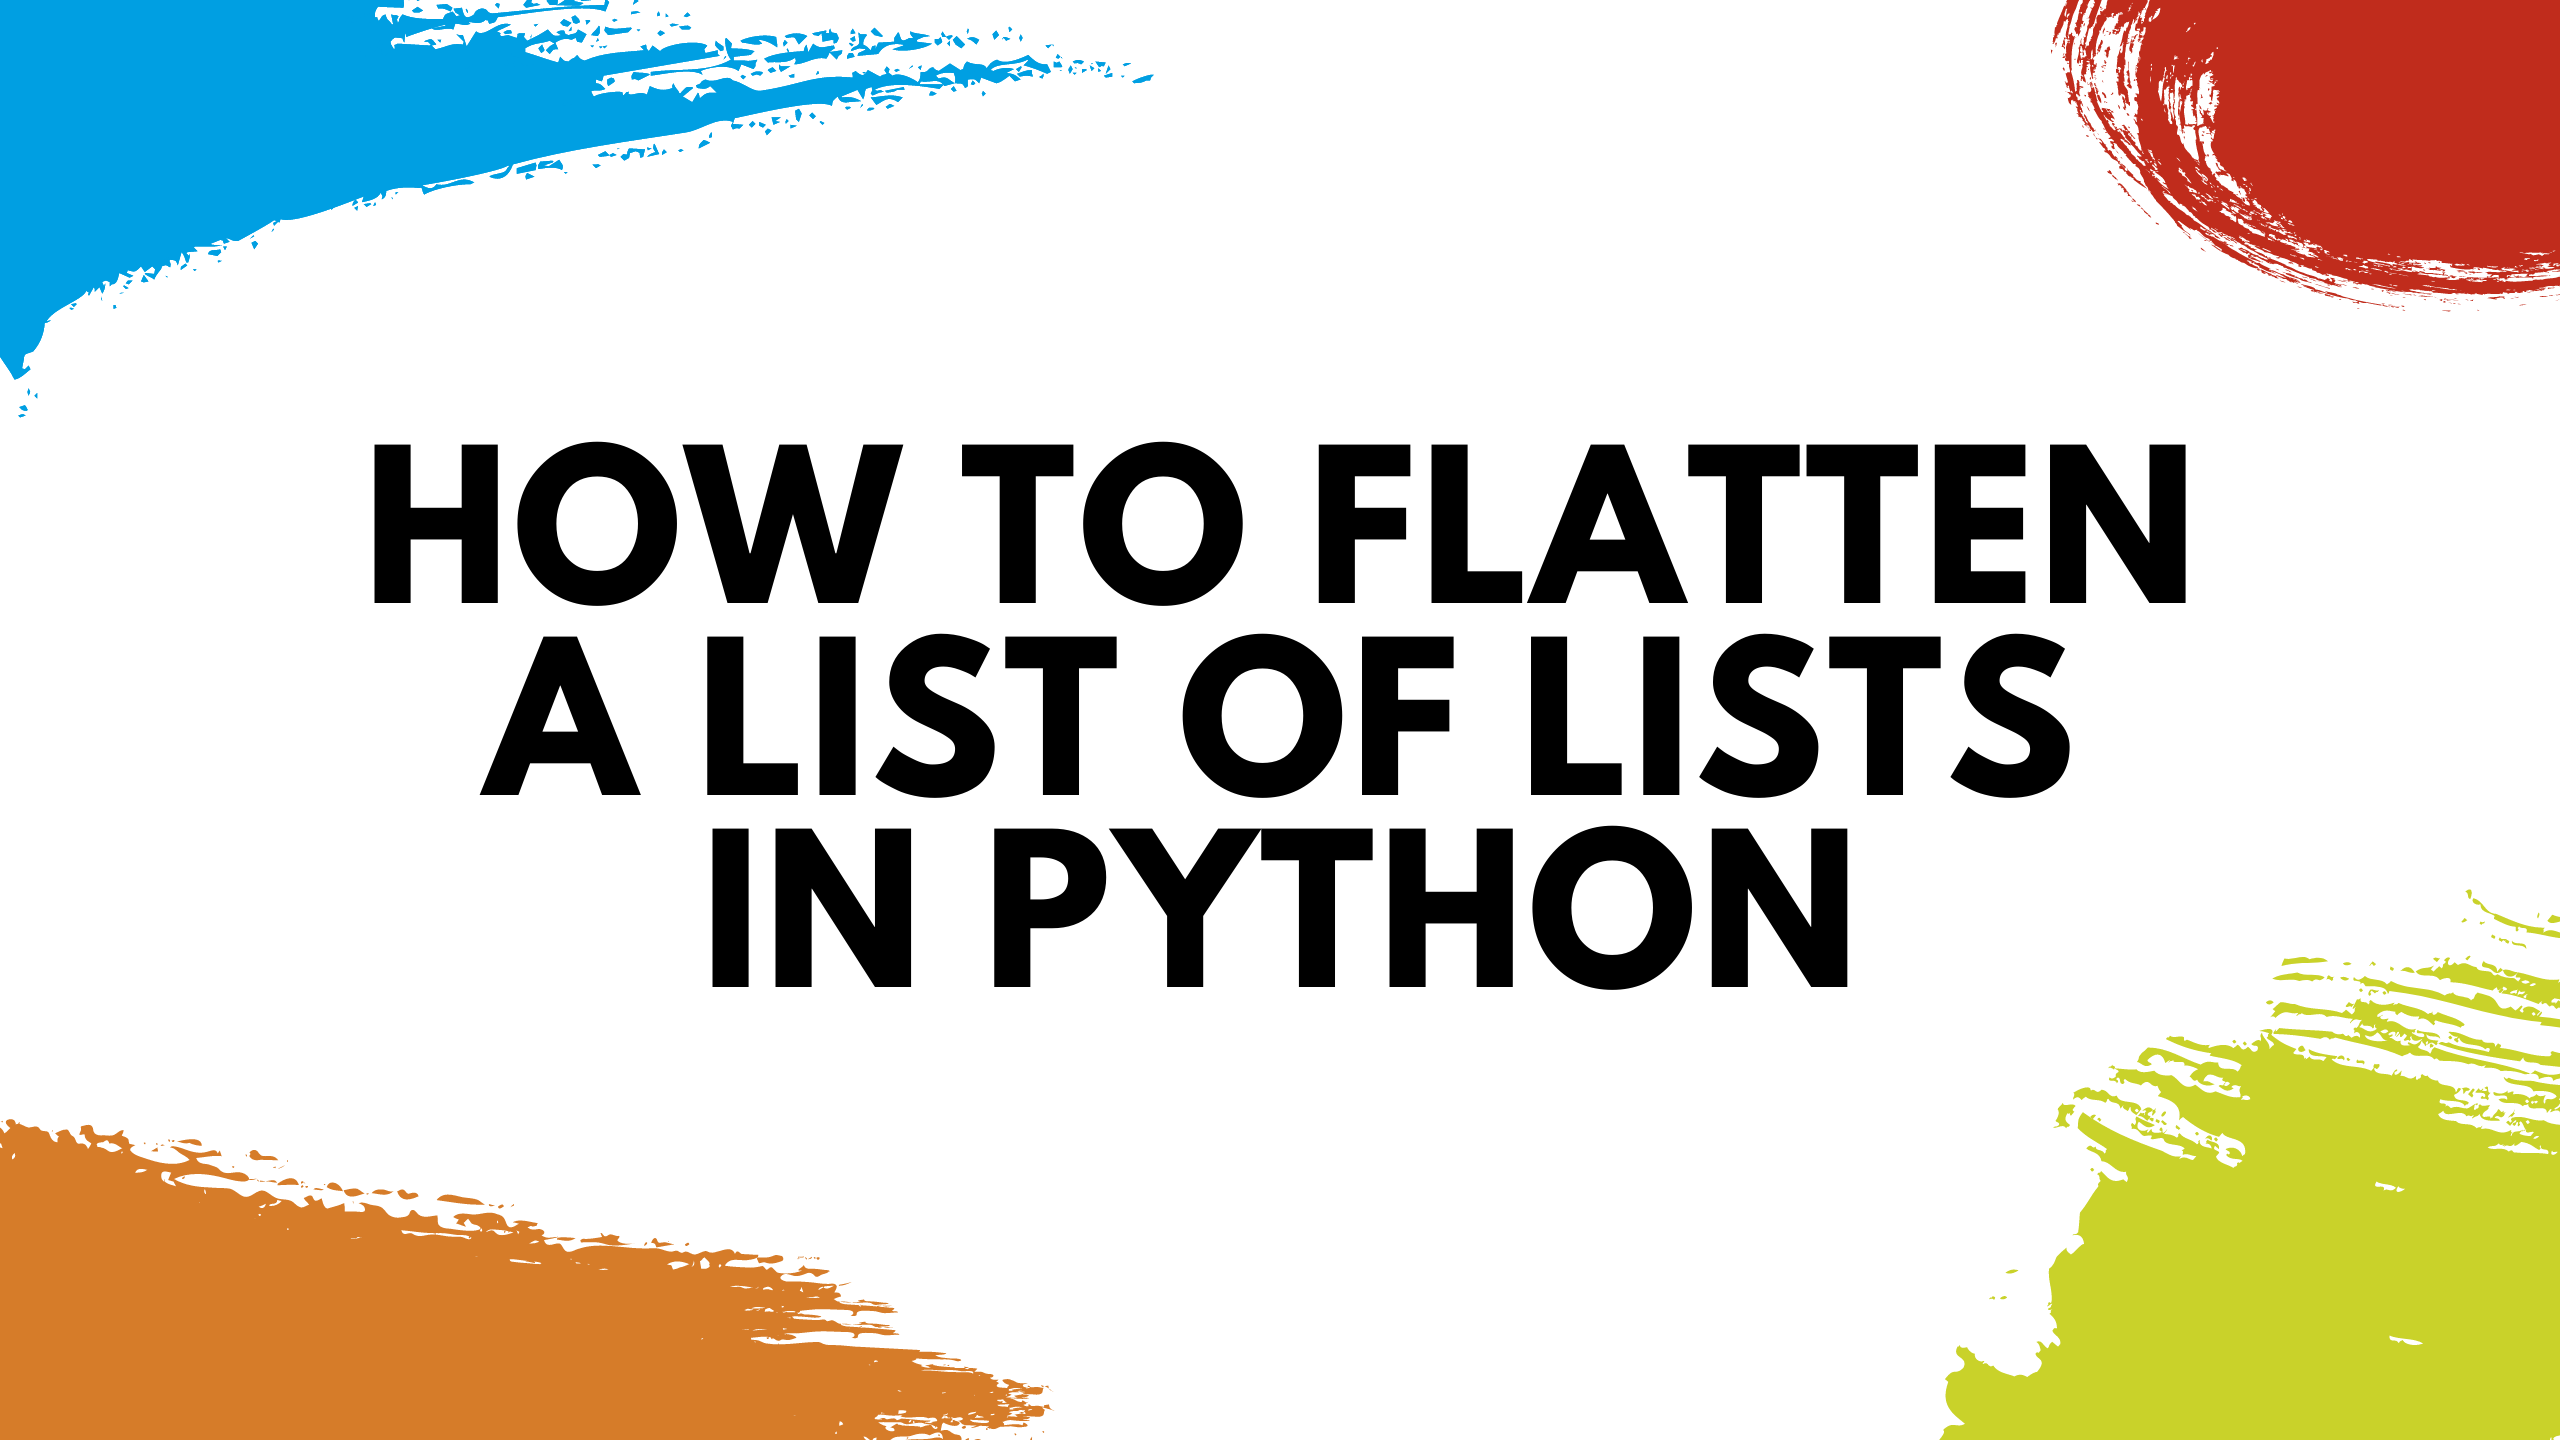 Flat python. Python Flat.